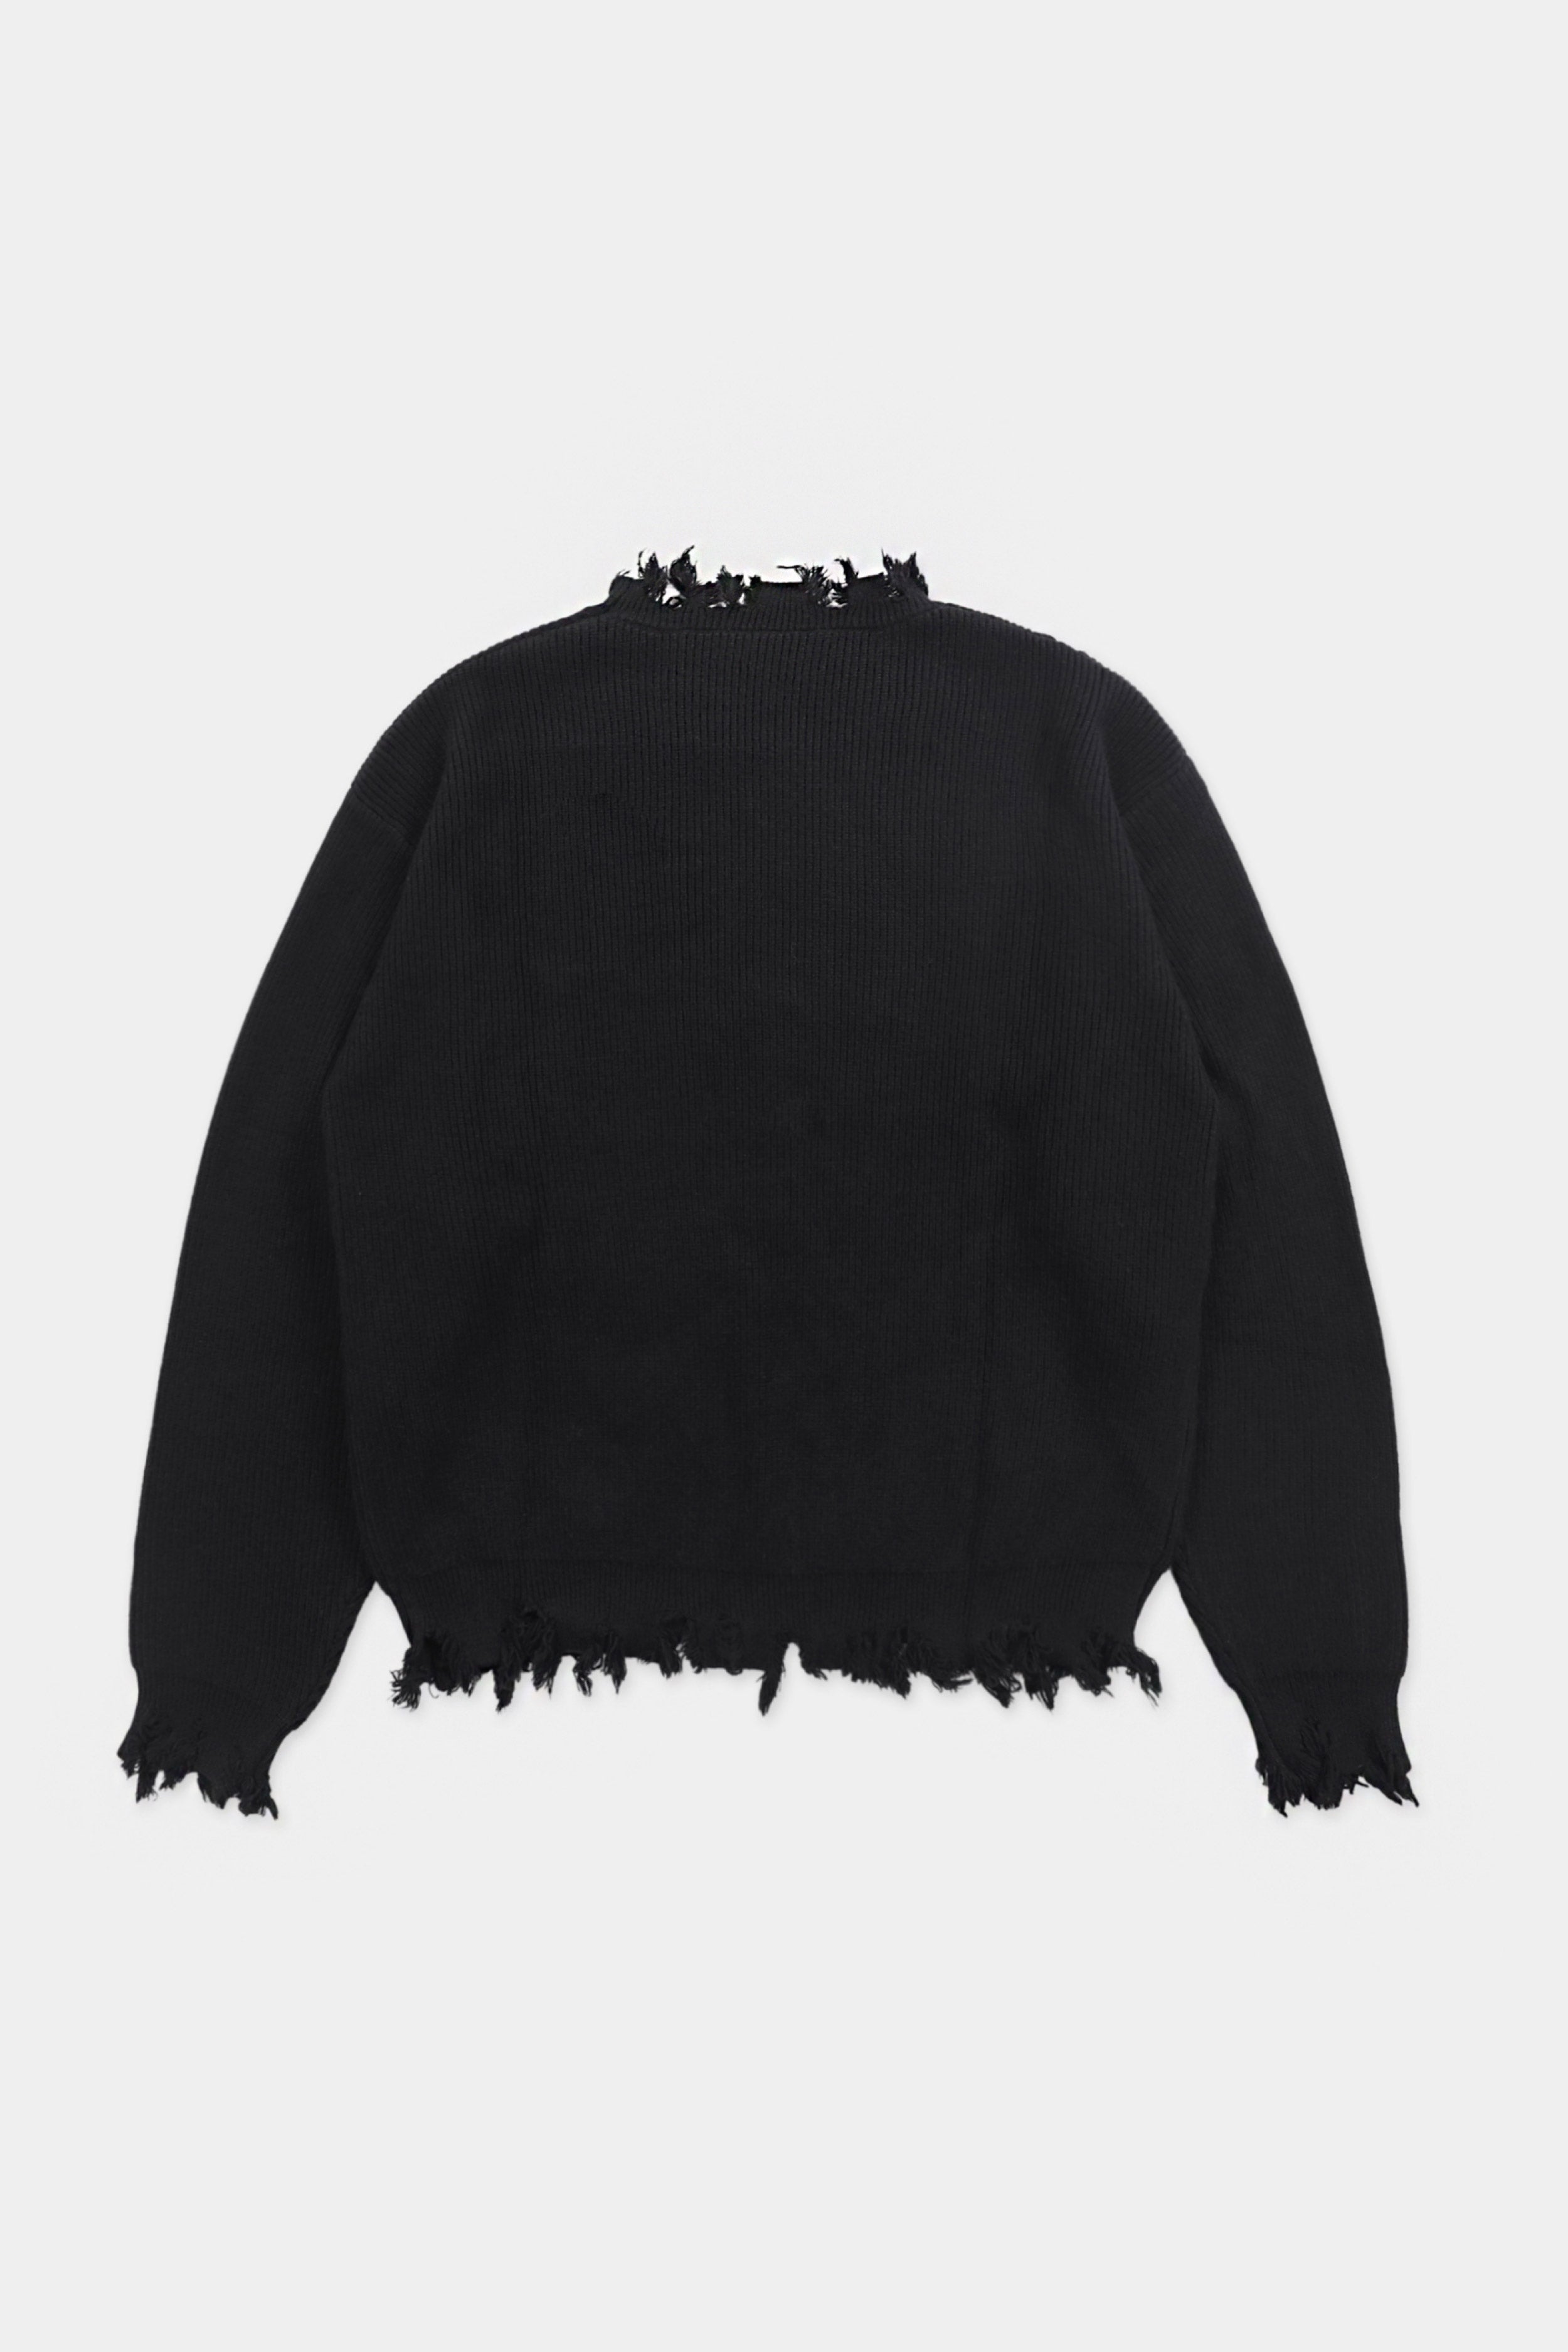 Badblood Destroyed Long Sleeve Sweater Black